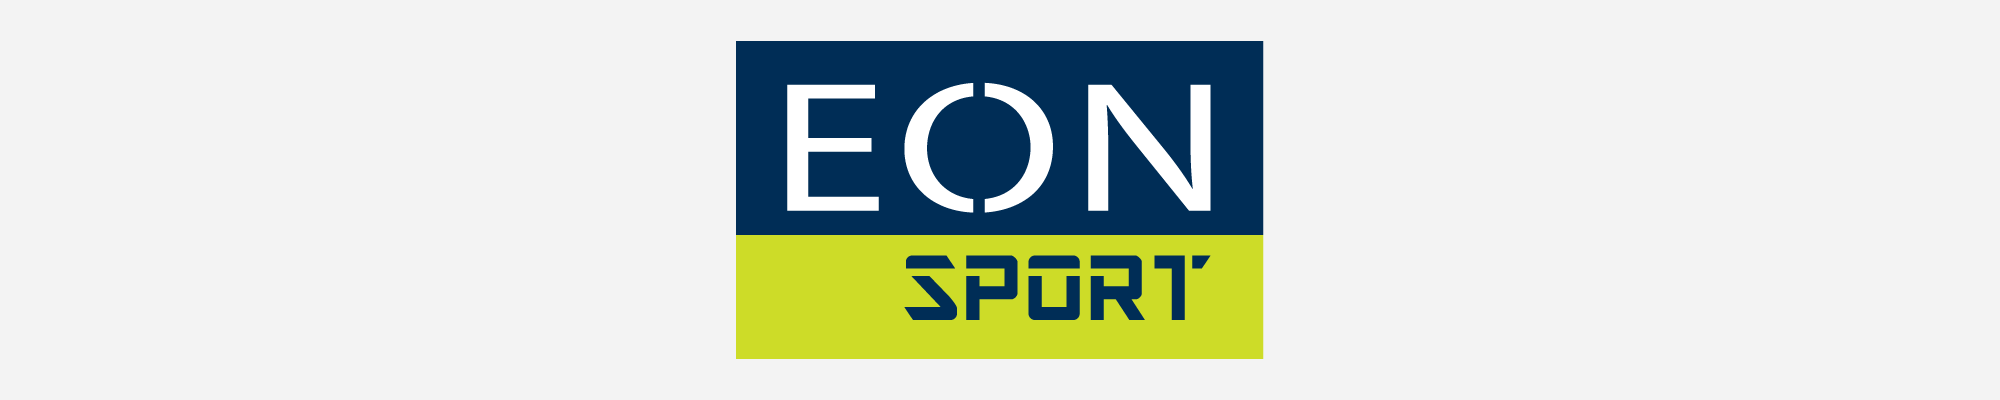 EON Sport